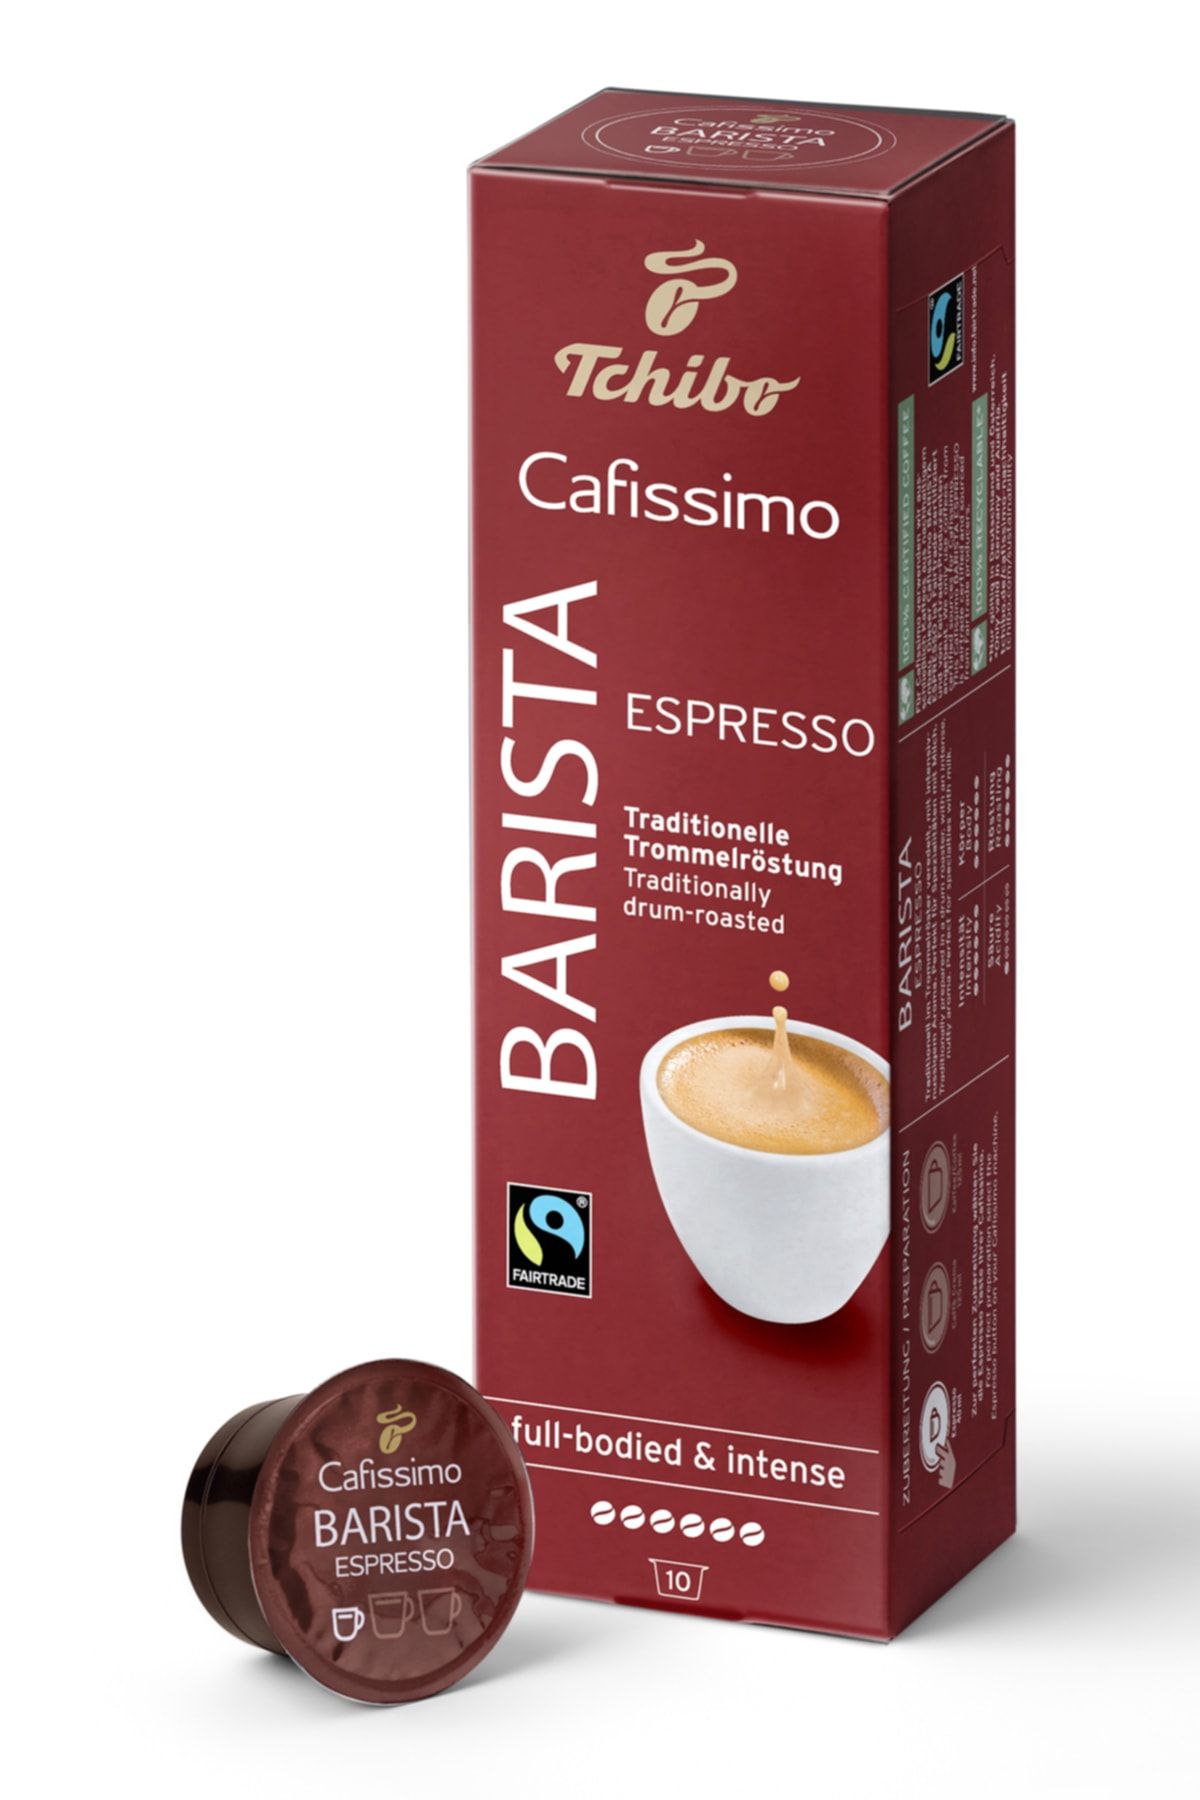 Tchibo Cafissimo Barista Espresso 10 Adet Kapsül Kahve